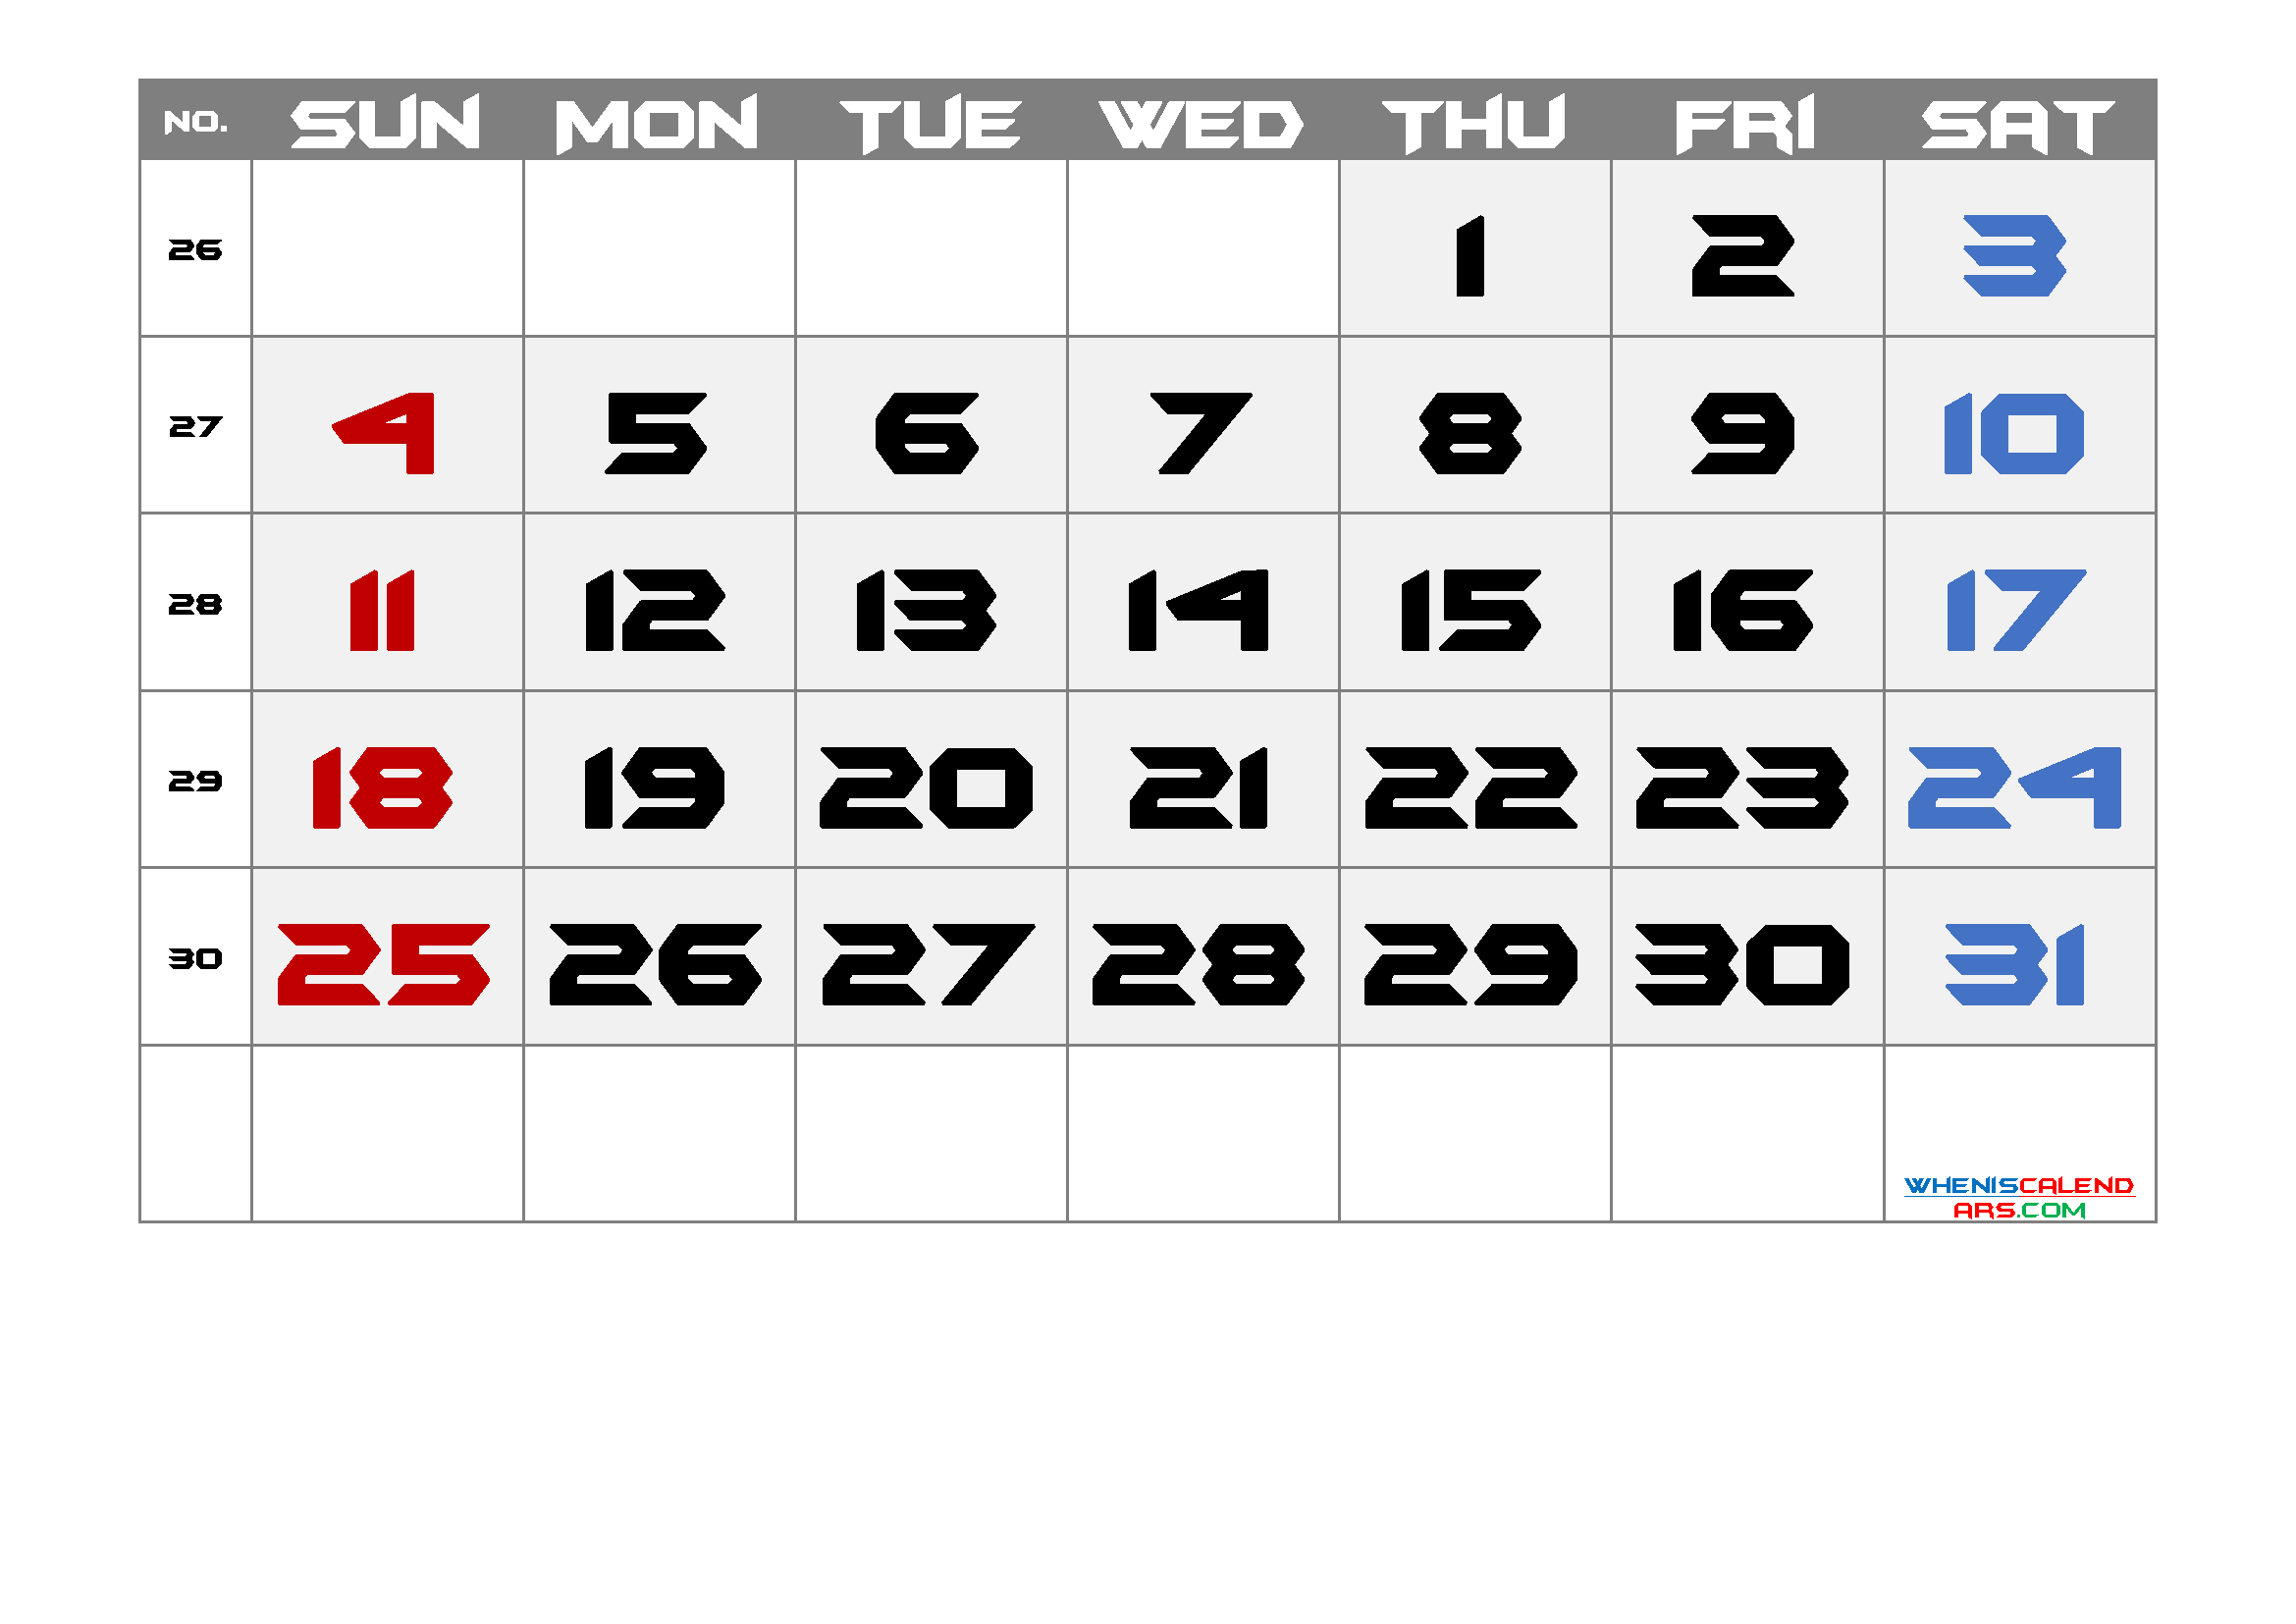 Editable July 2021 Calendar